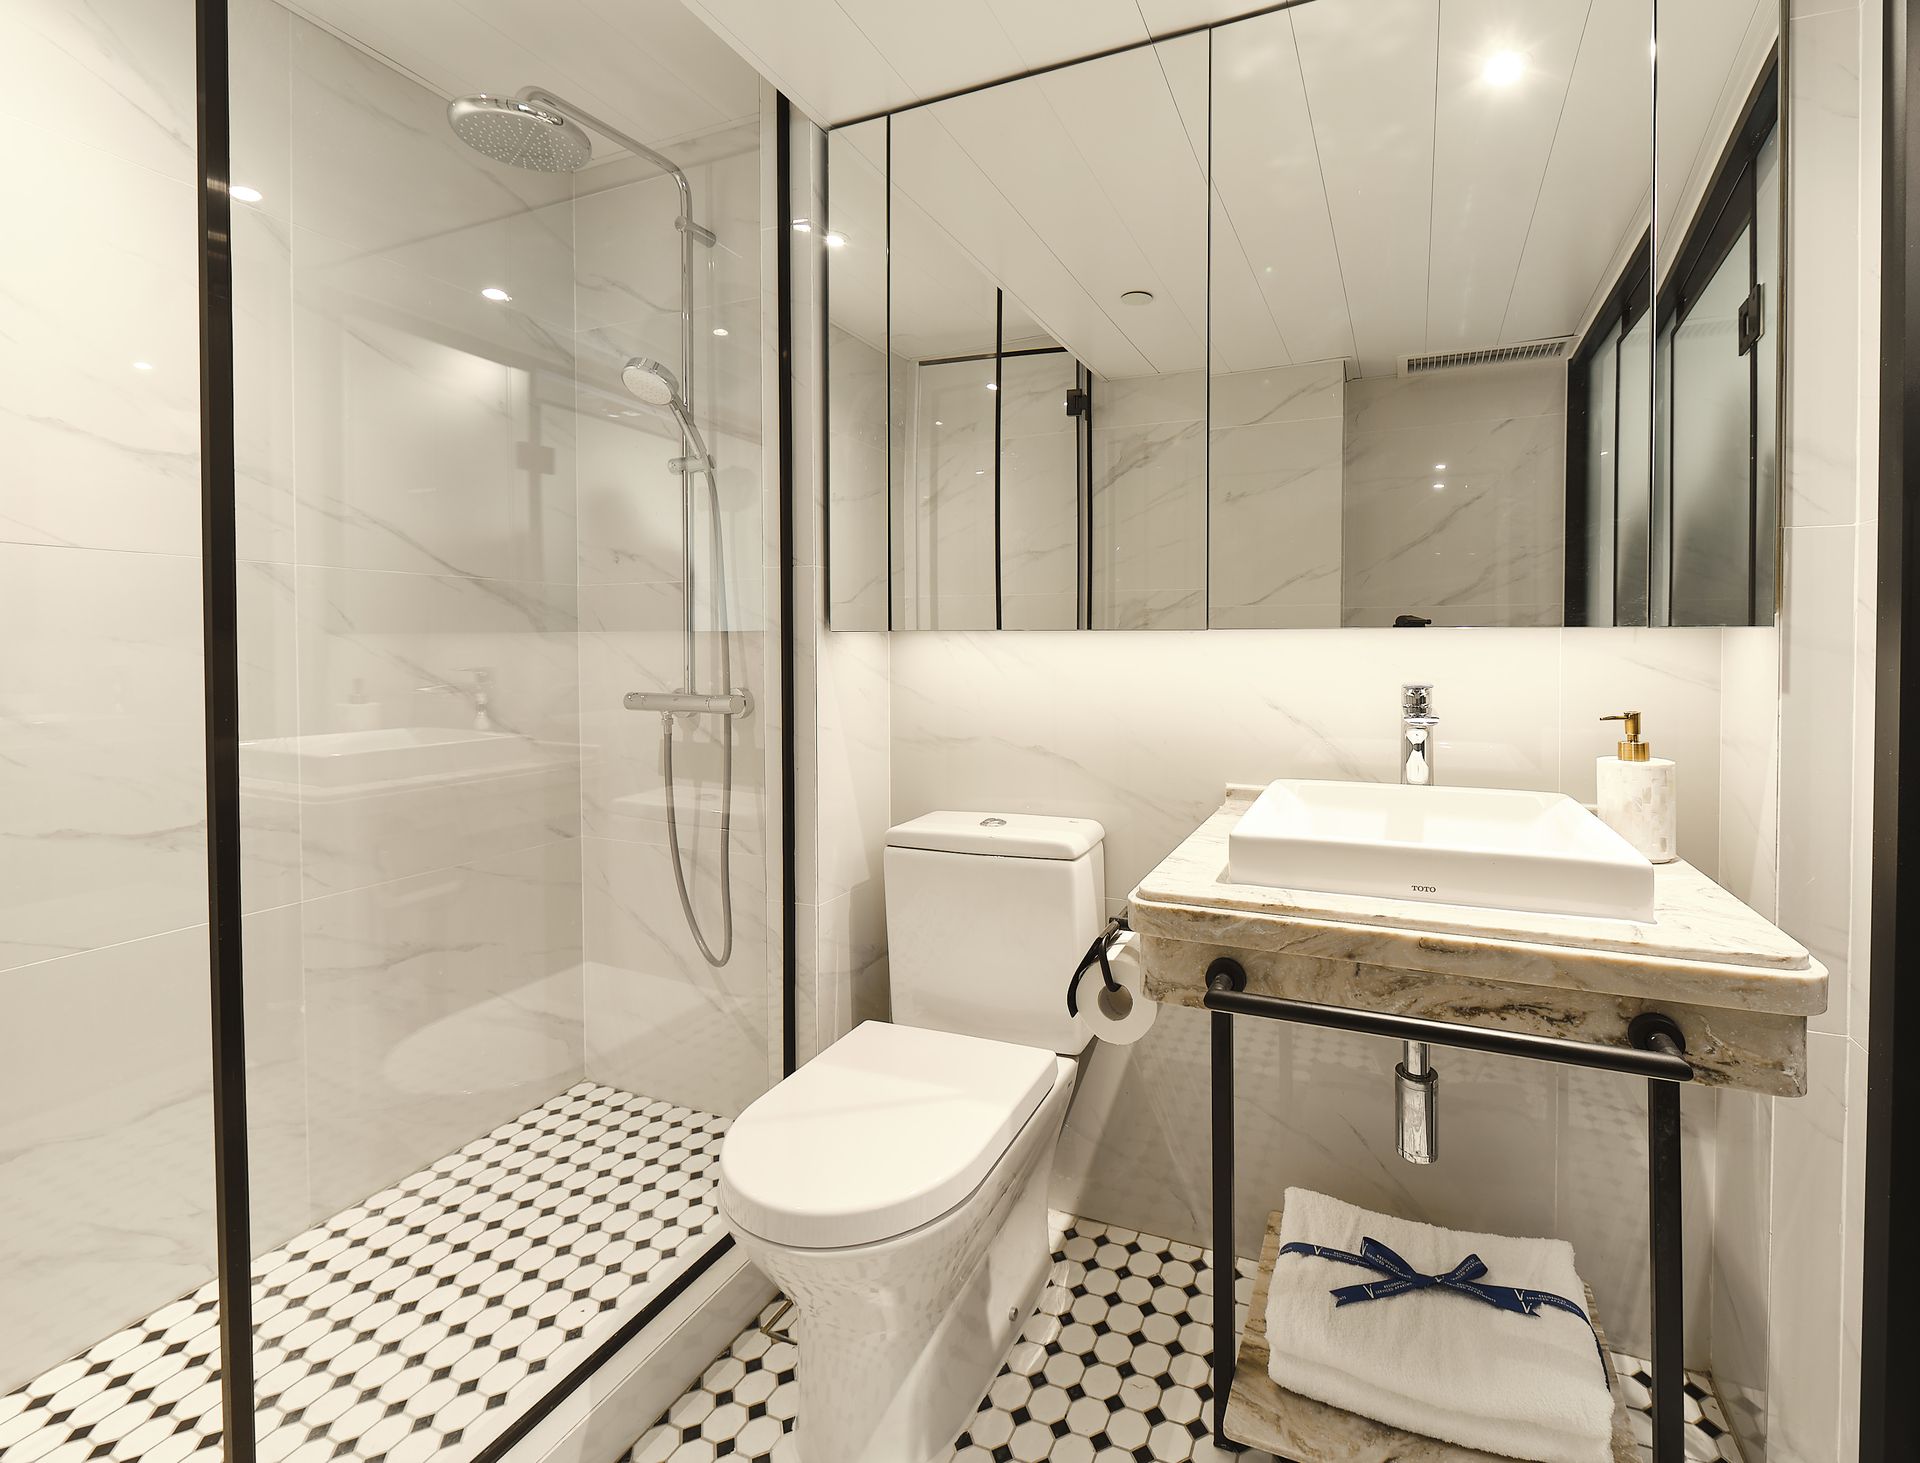 The V 銅鑼灣怡和街服務式住宅高級公寓廁所及淋浴間